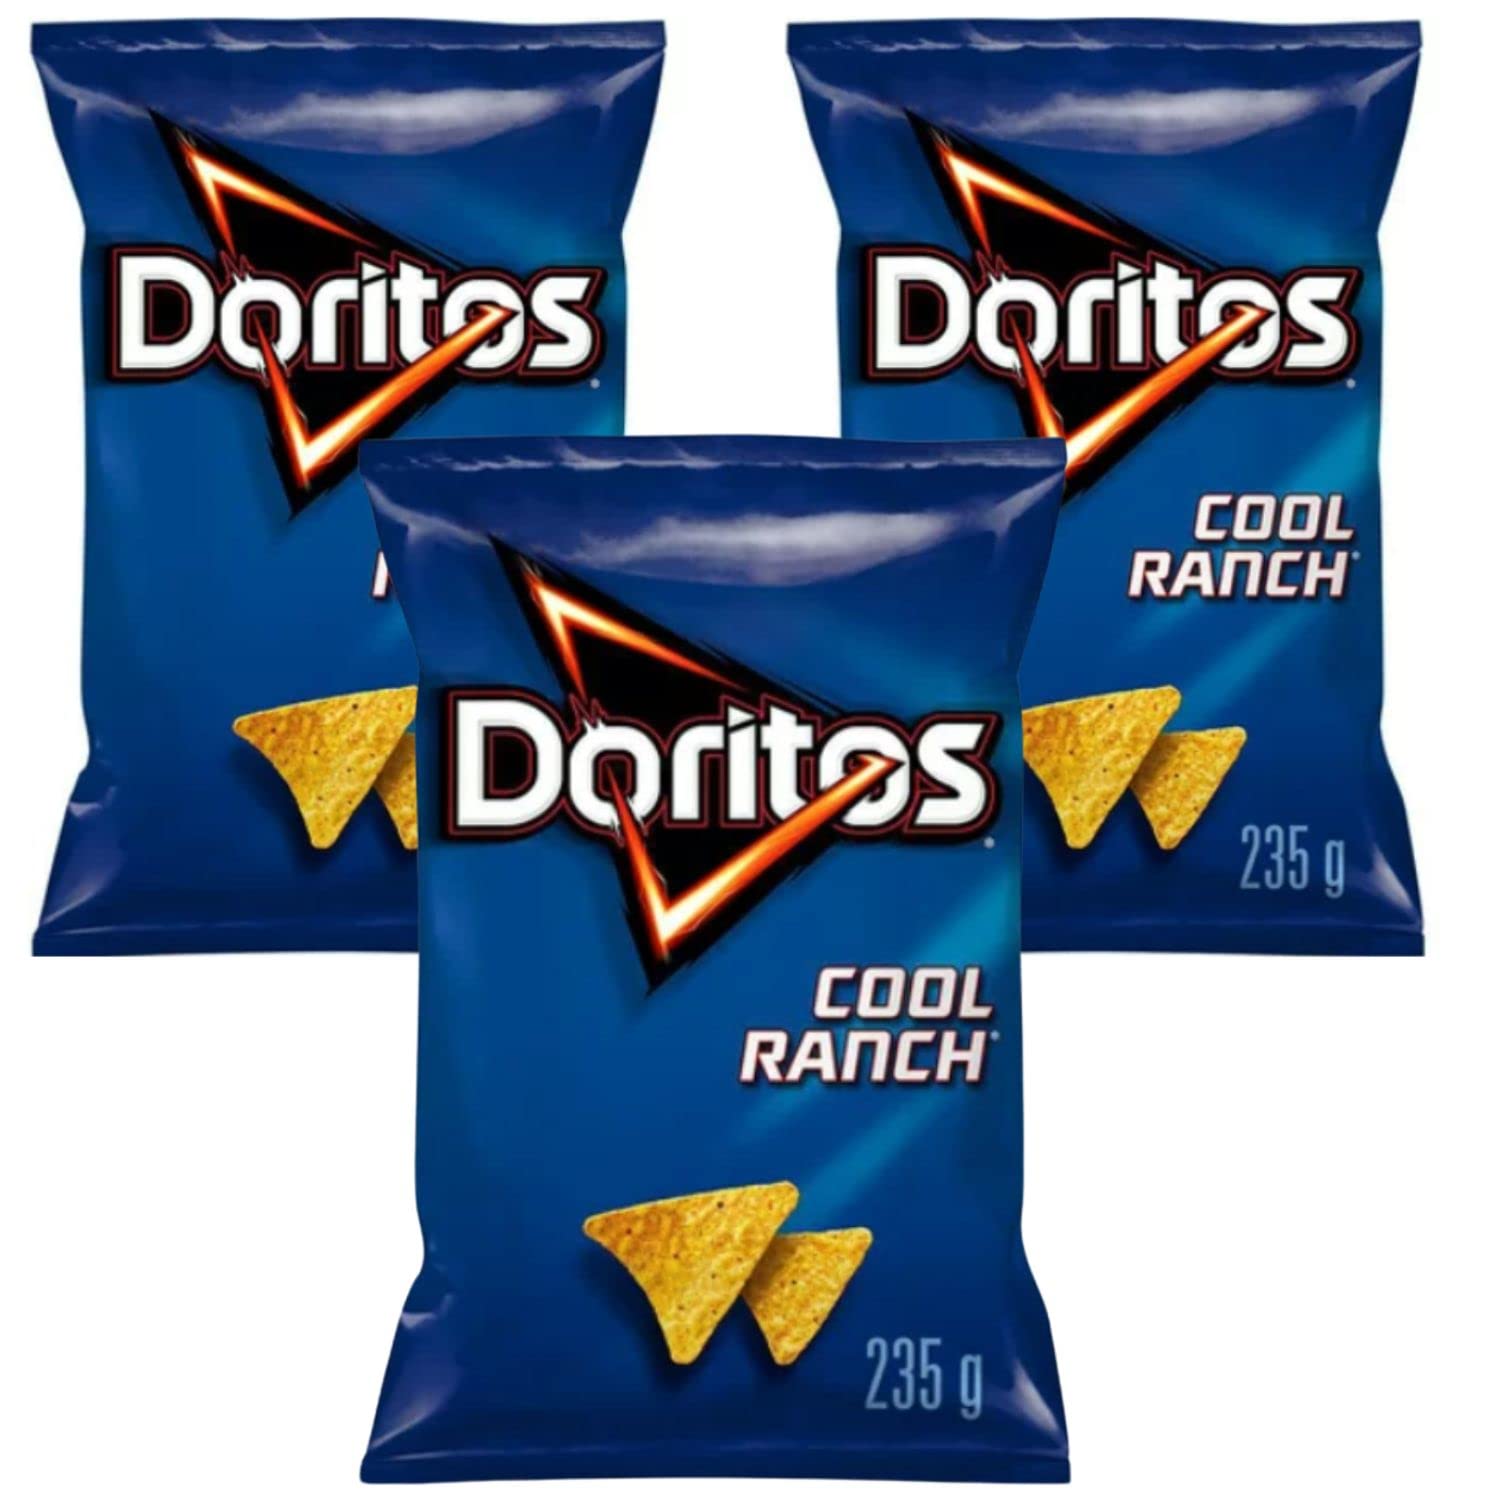 Doritos Cool Ranch Tortilla Chips pack of 3